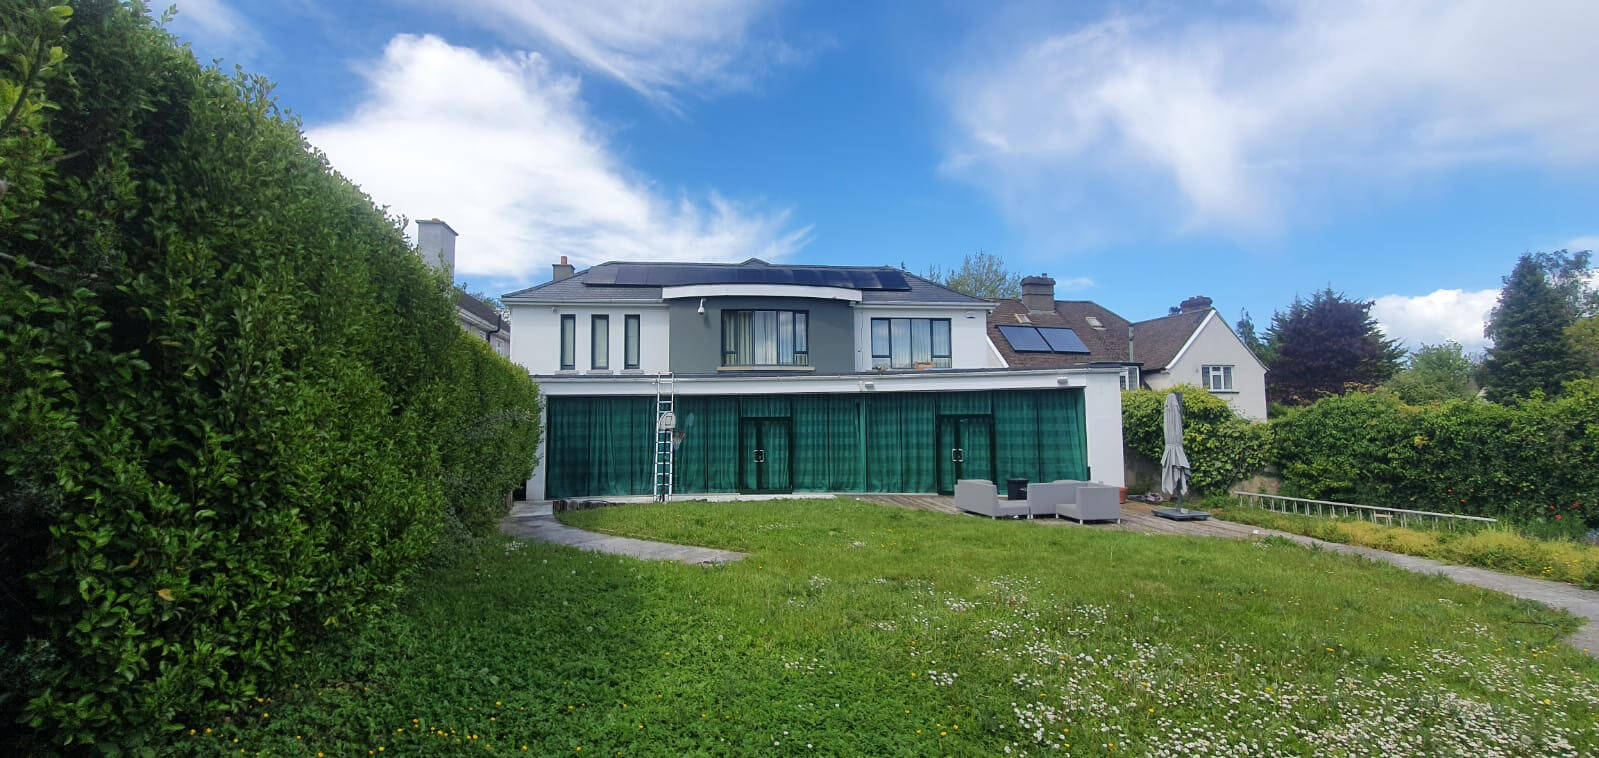 Blackrock, Co. Dublin 8.4 kW home solar PV installation